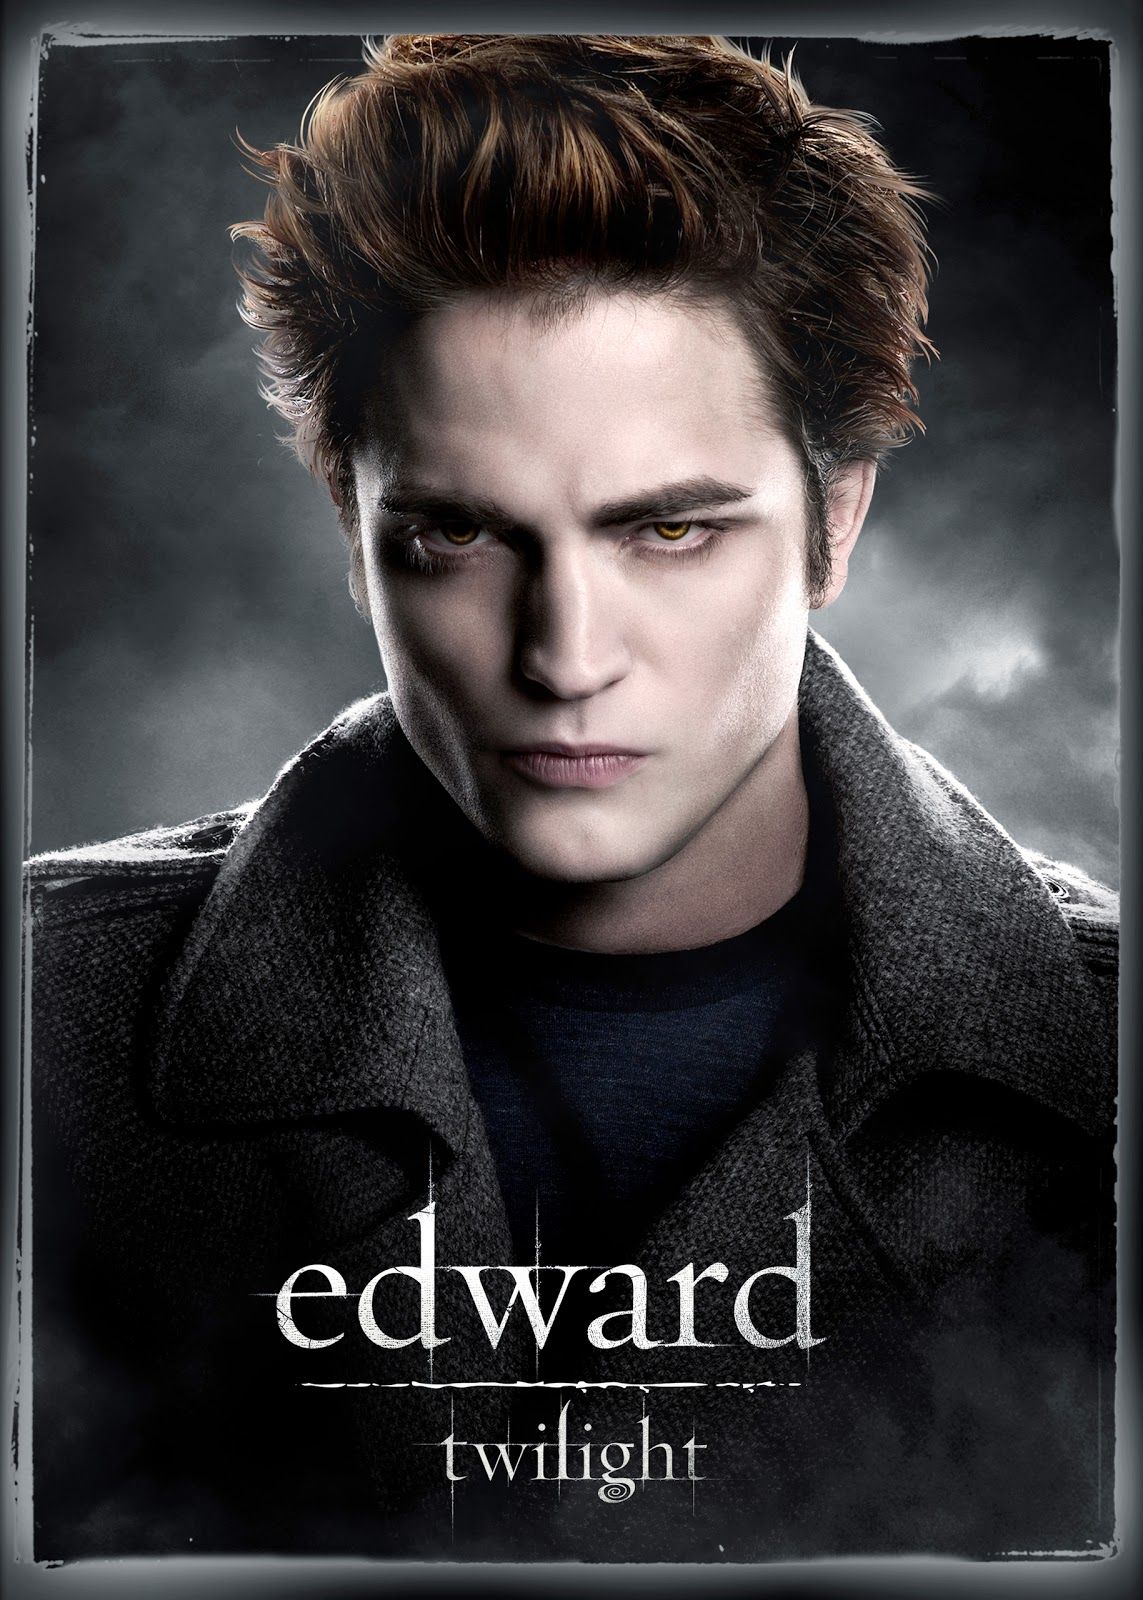 Wallpaper Background: Robert Pattinson. Edward Cullen. Twilight